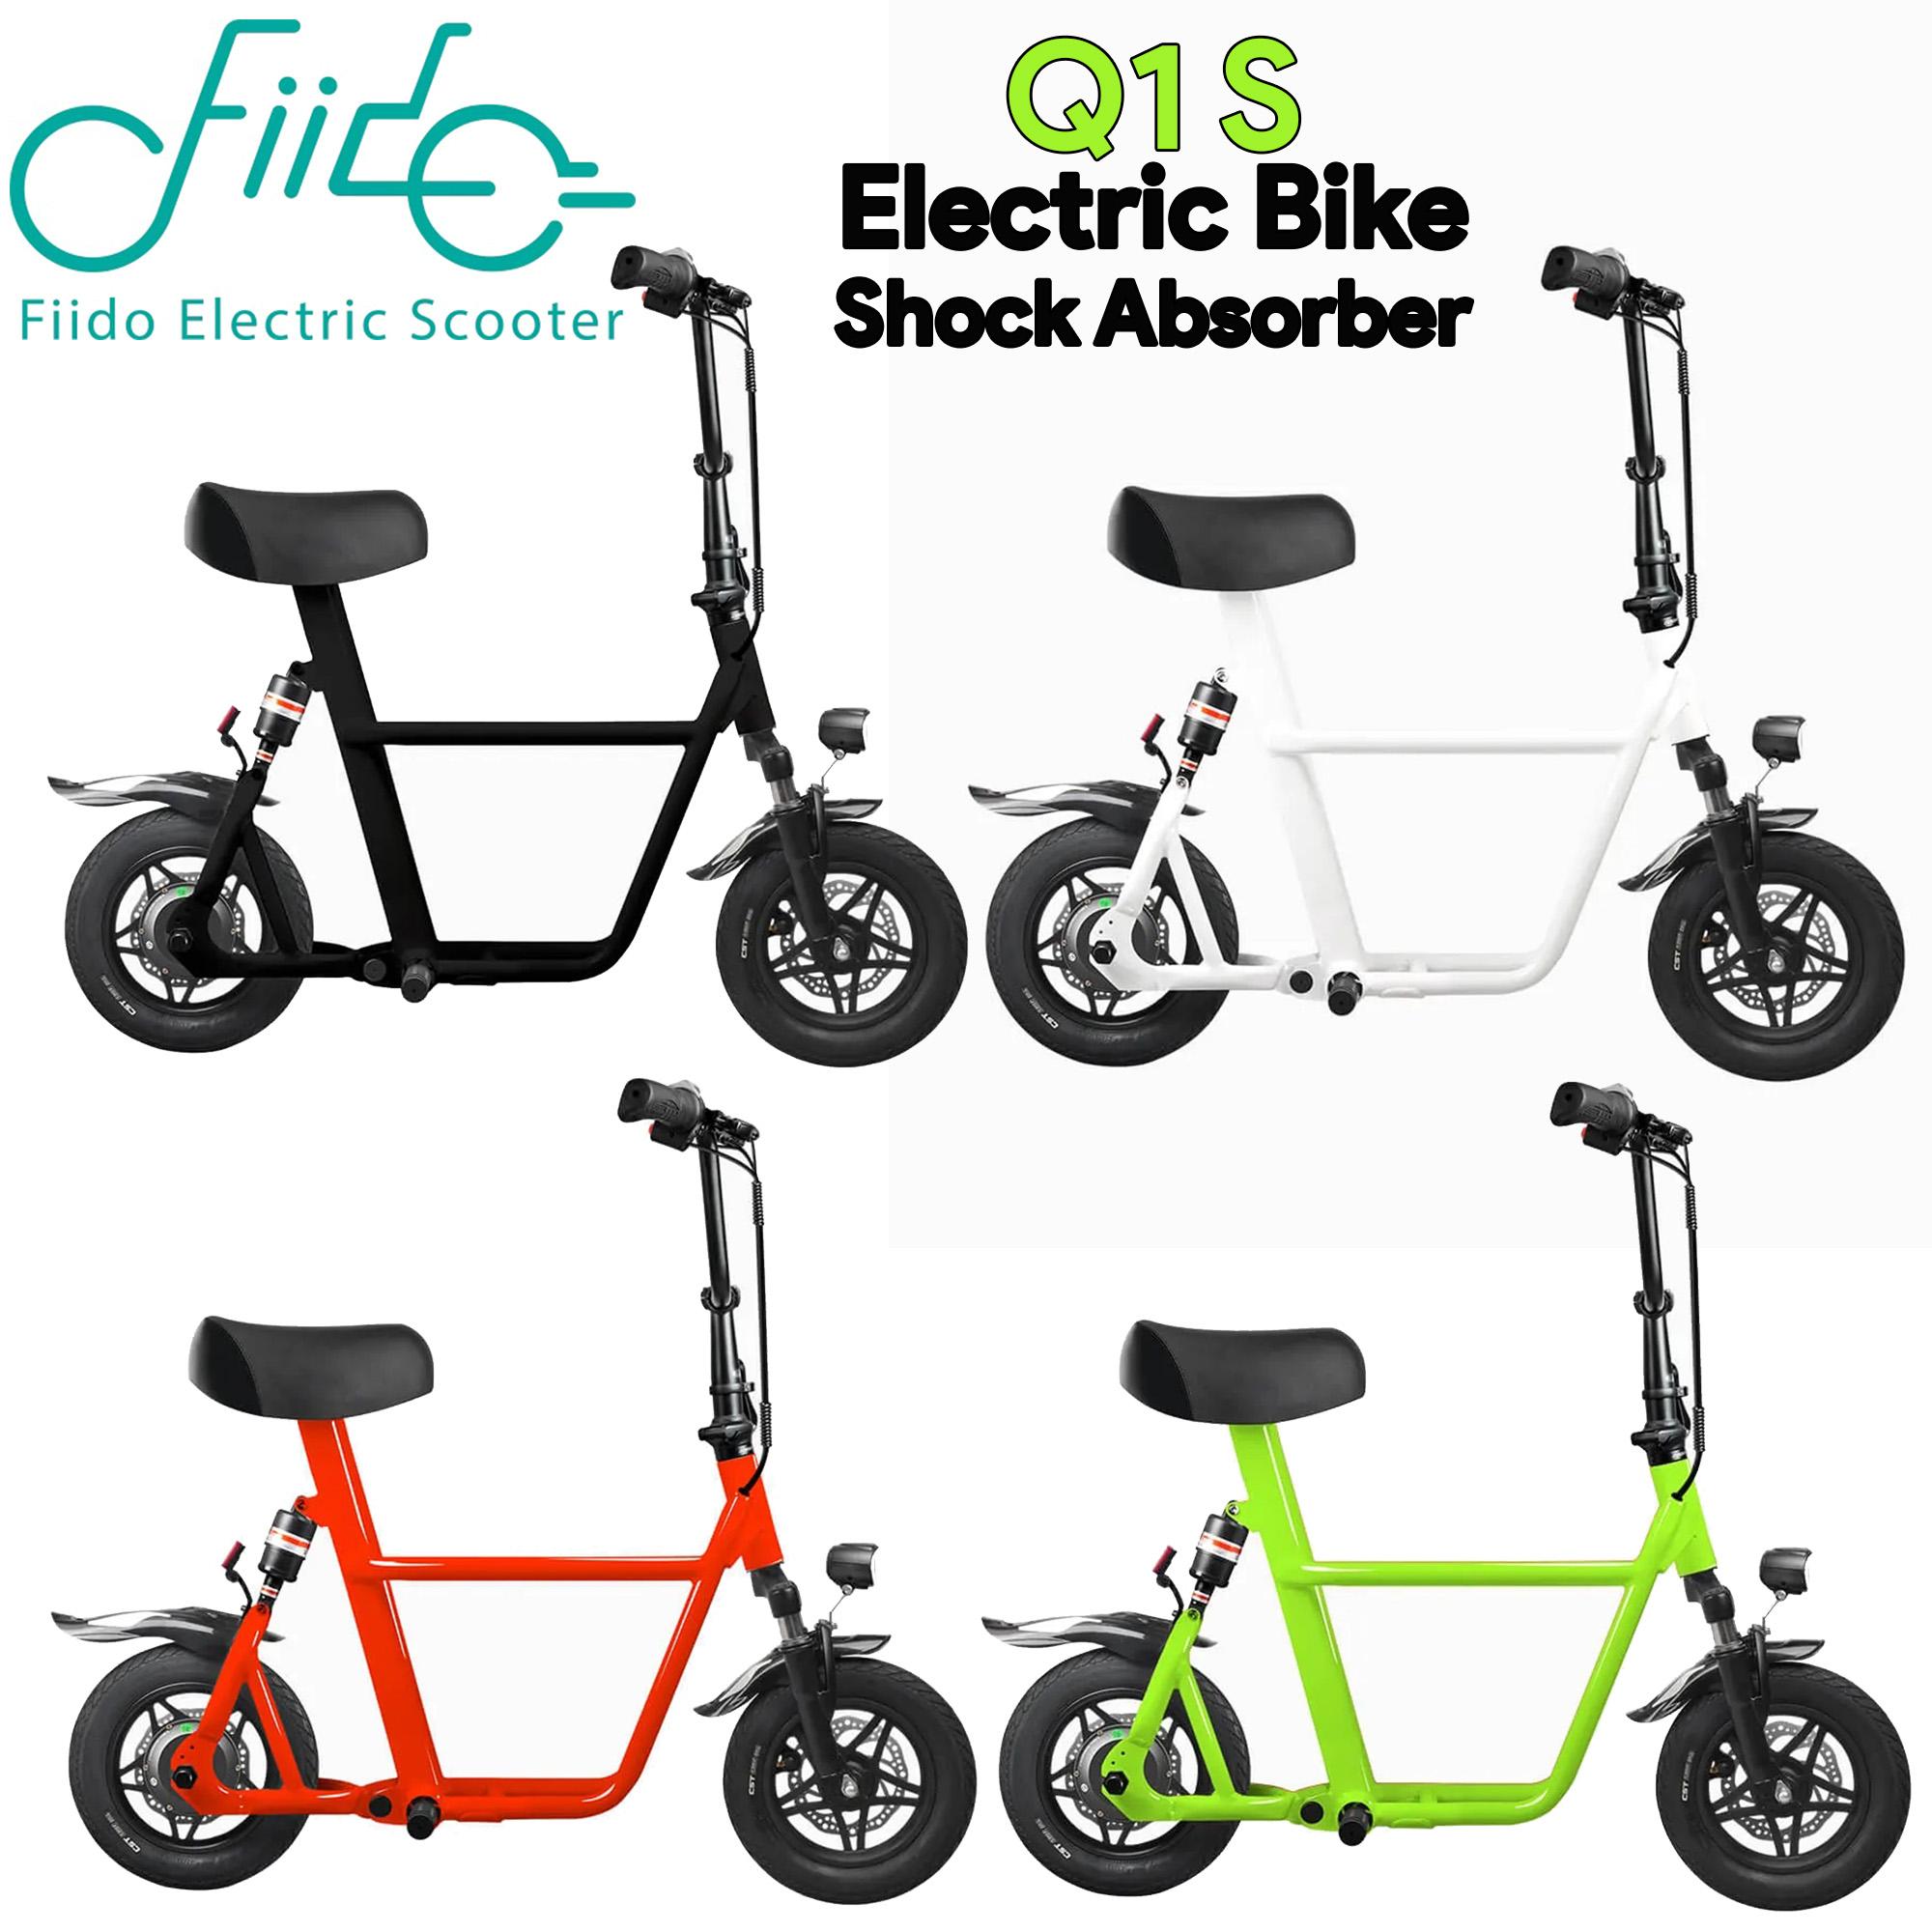 show me electric bikes